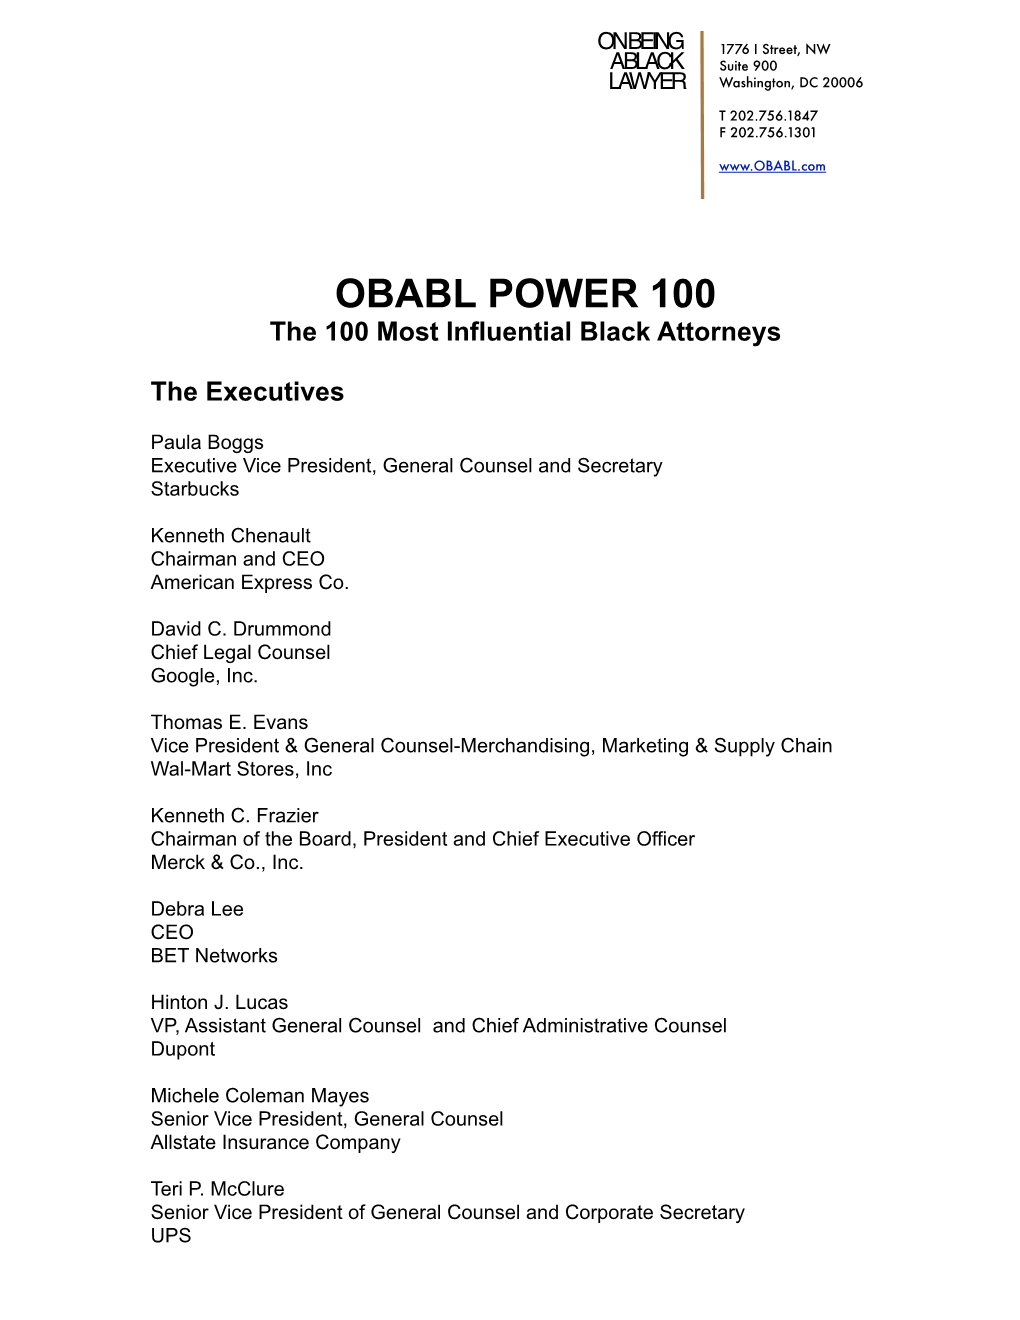 OBABL POWER 100 the 100 Most Influential Black Attorneys